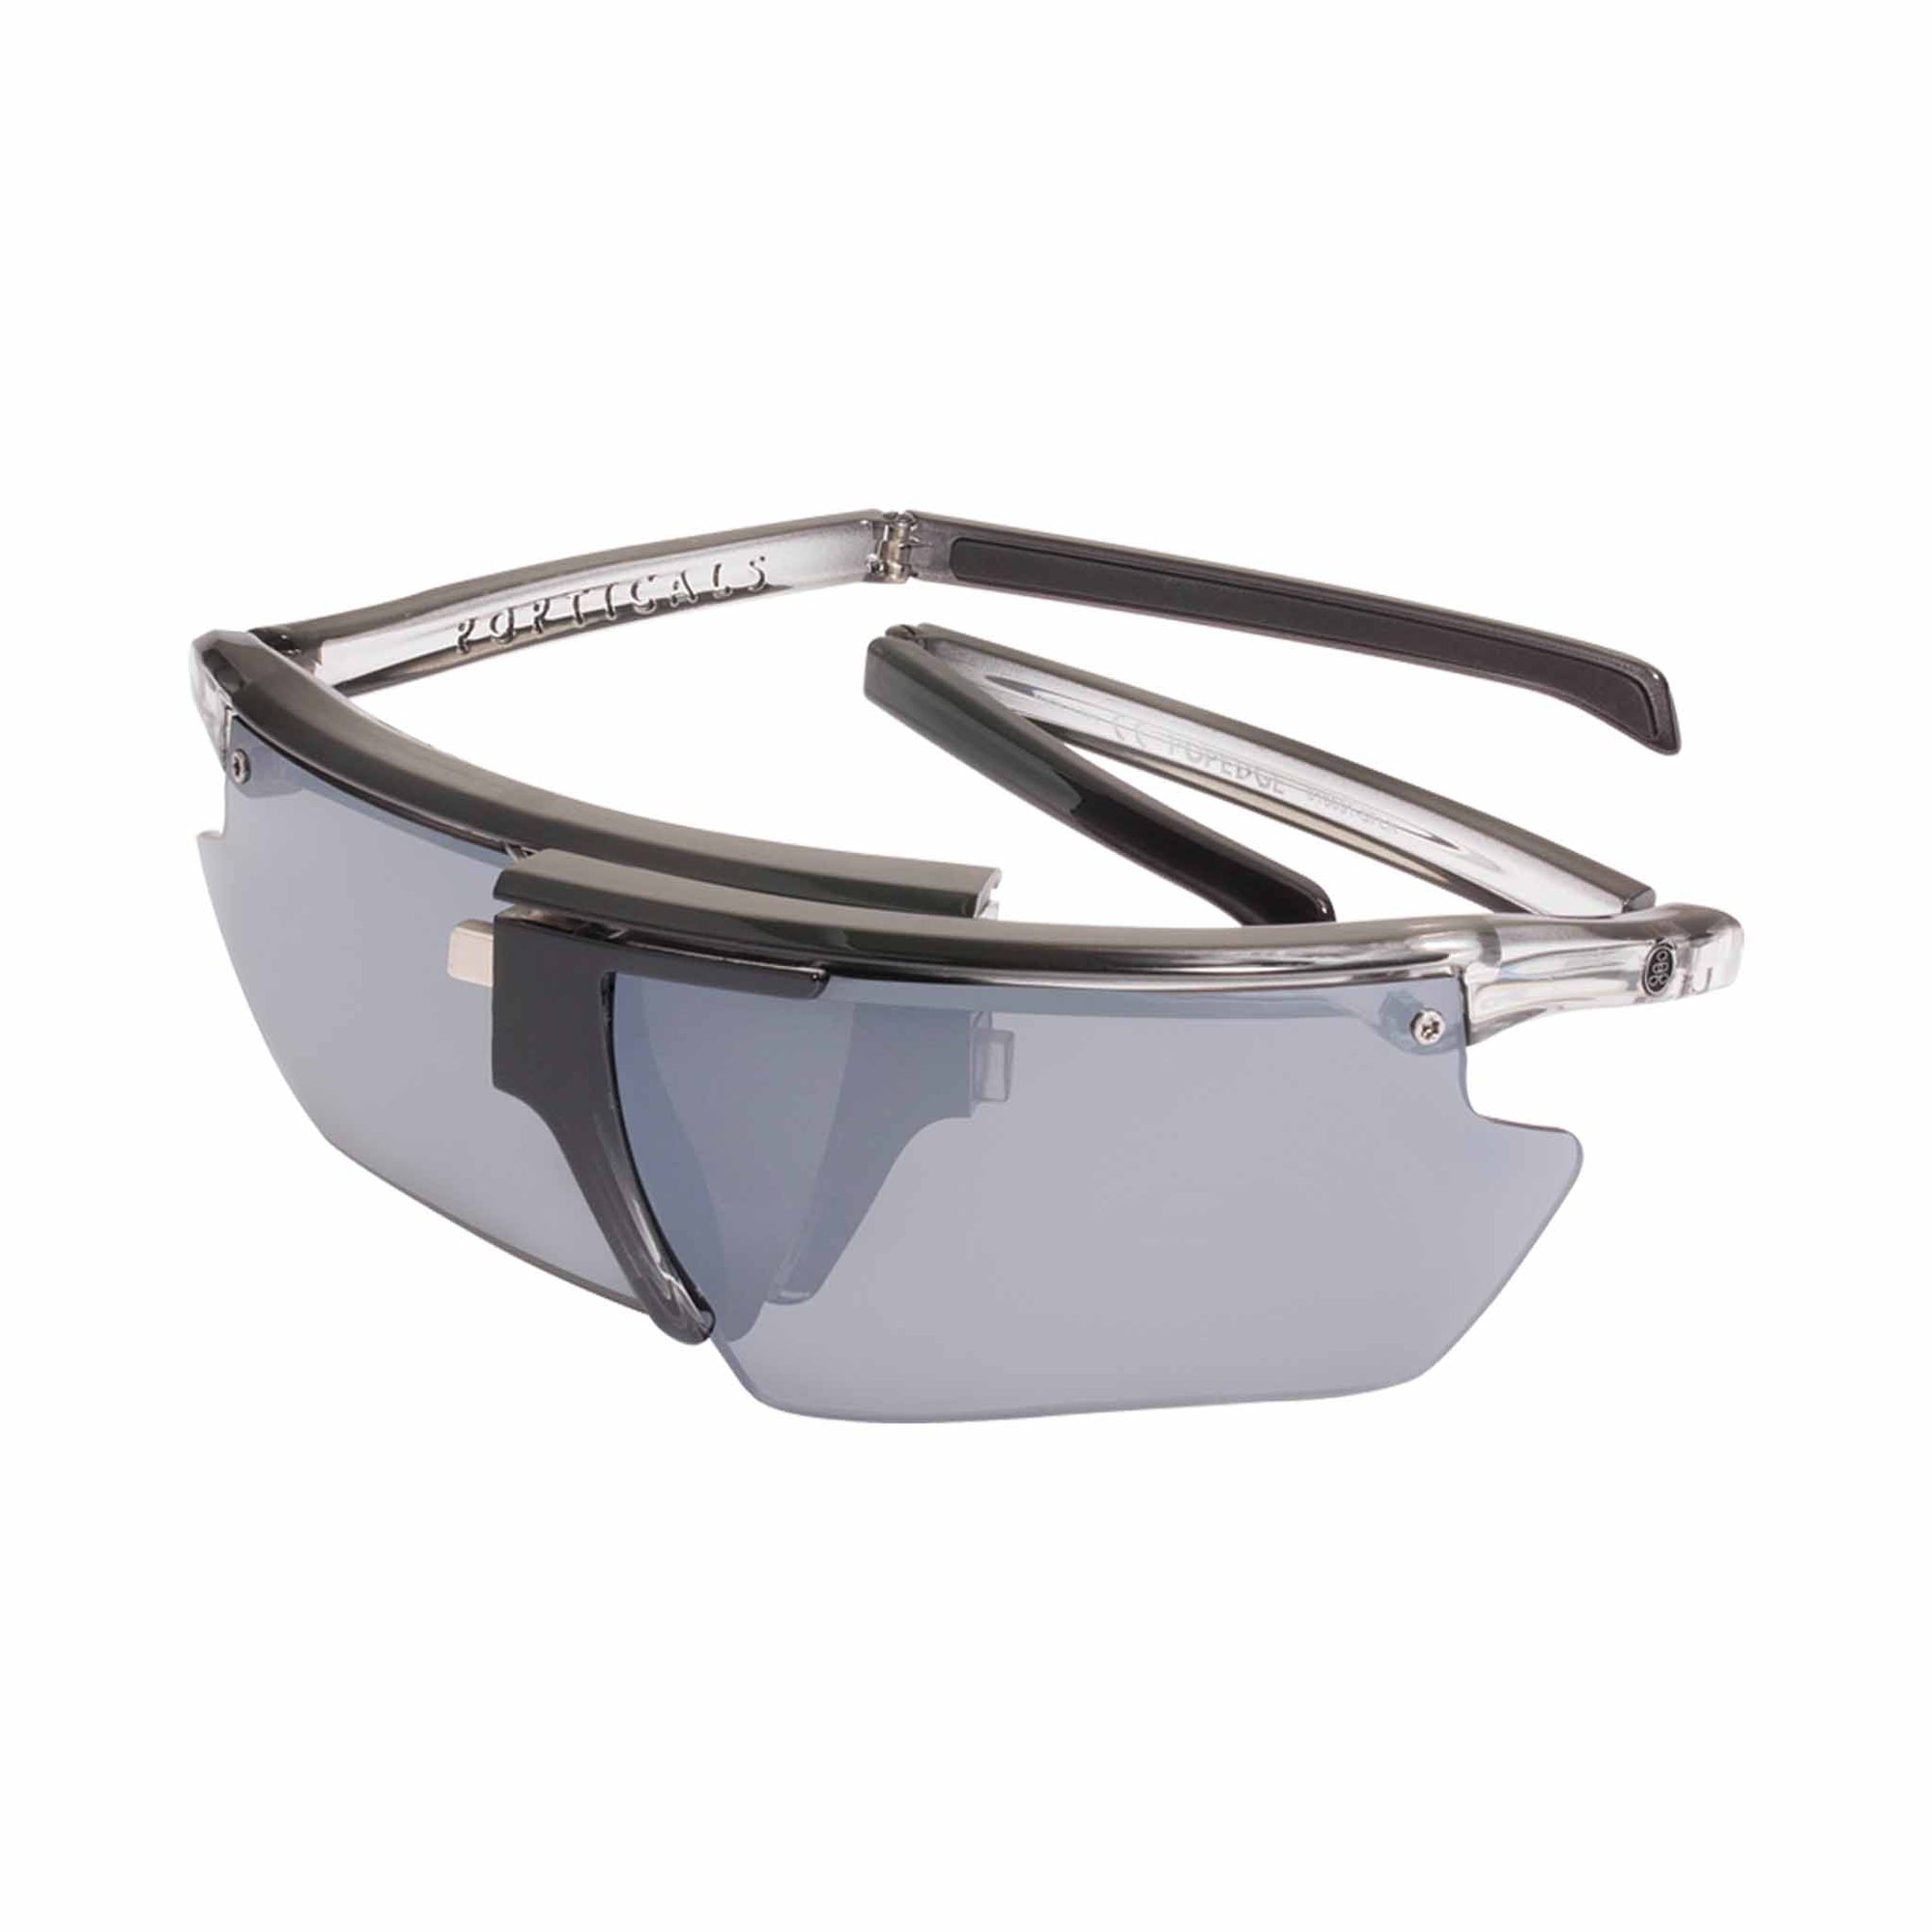 Popticals, Premium Compact Sunglasses, PopEdge, 010091-SFLN, Polarized Sunglasses, Gloss Smoke Frame, Gray Lenses with Silver Mirror Finish, Glam View